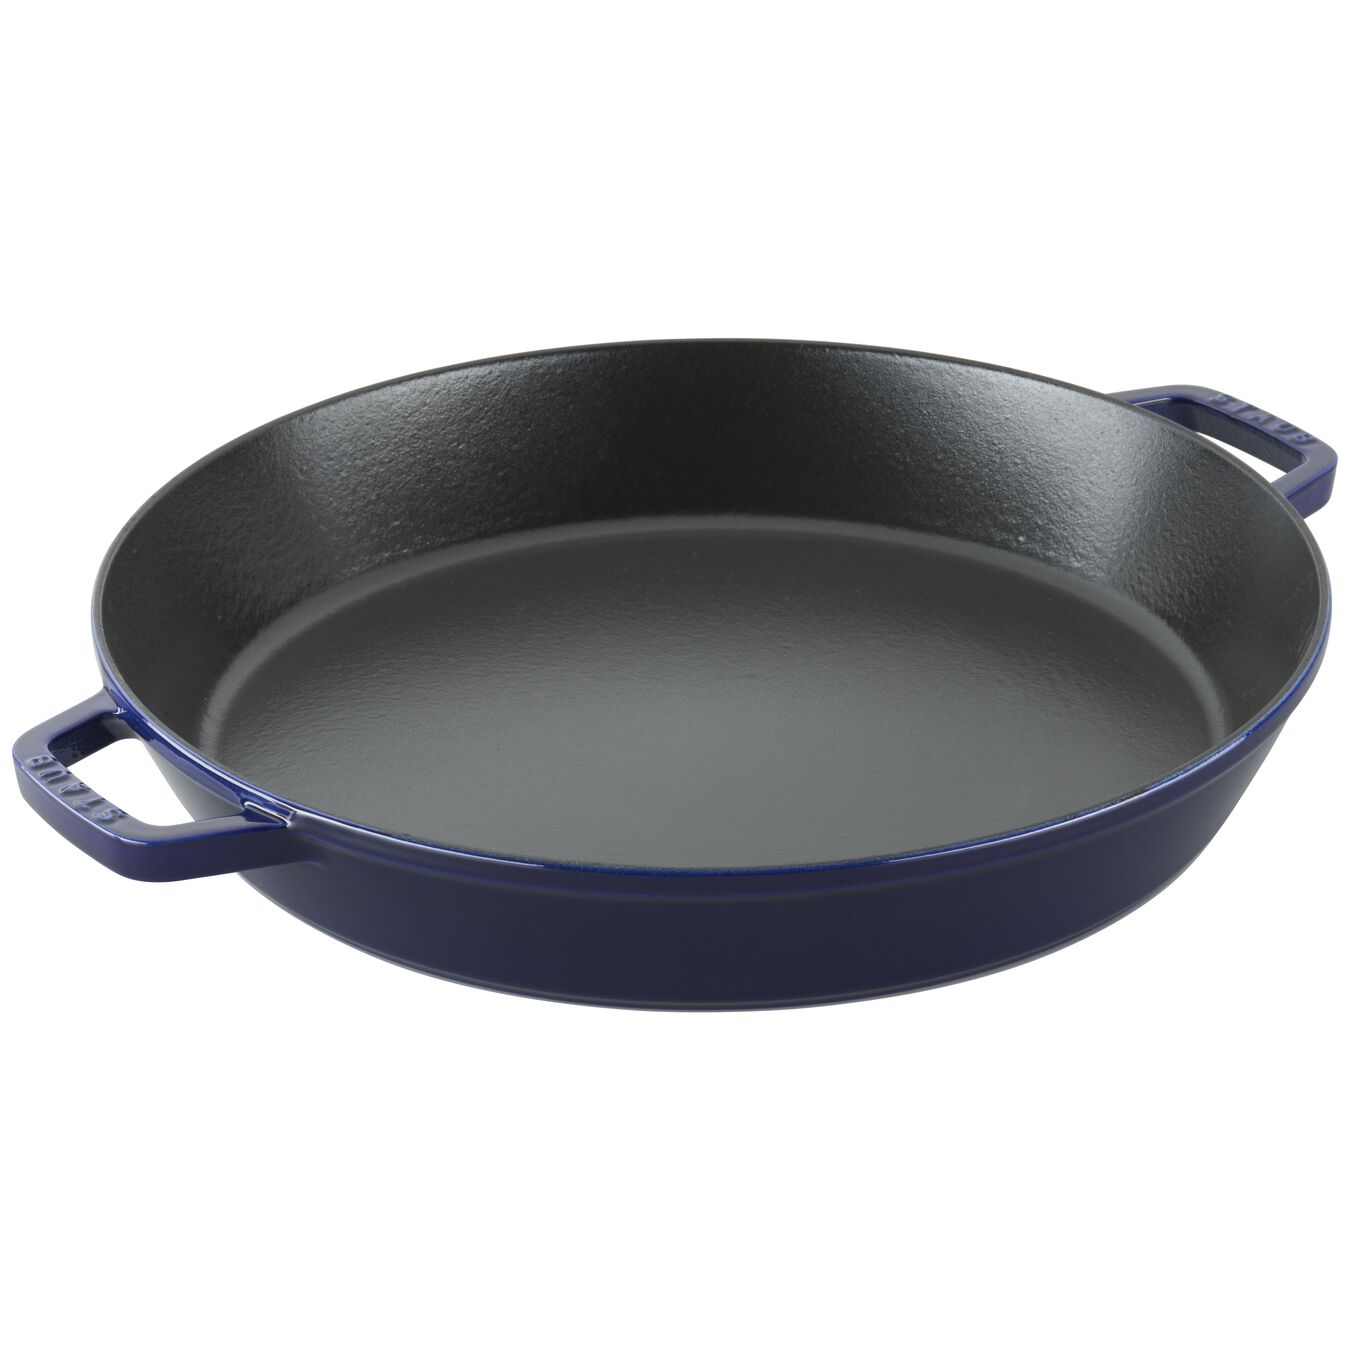 40 cm cast iron Paella pan, dark-blue - Visual Imperfections,,large 2